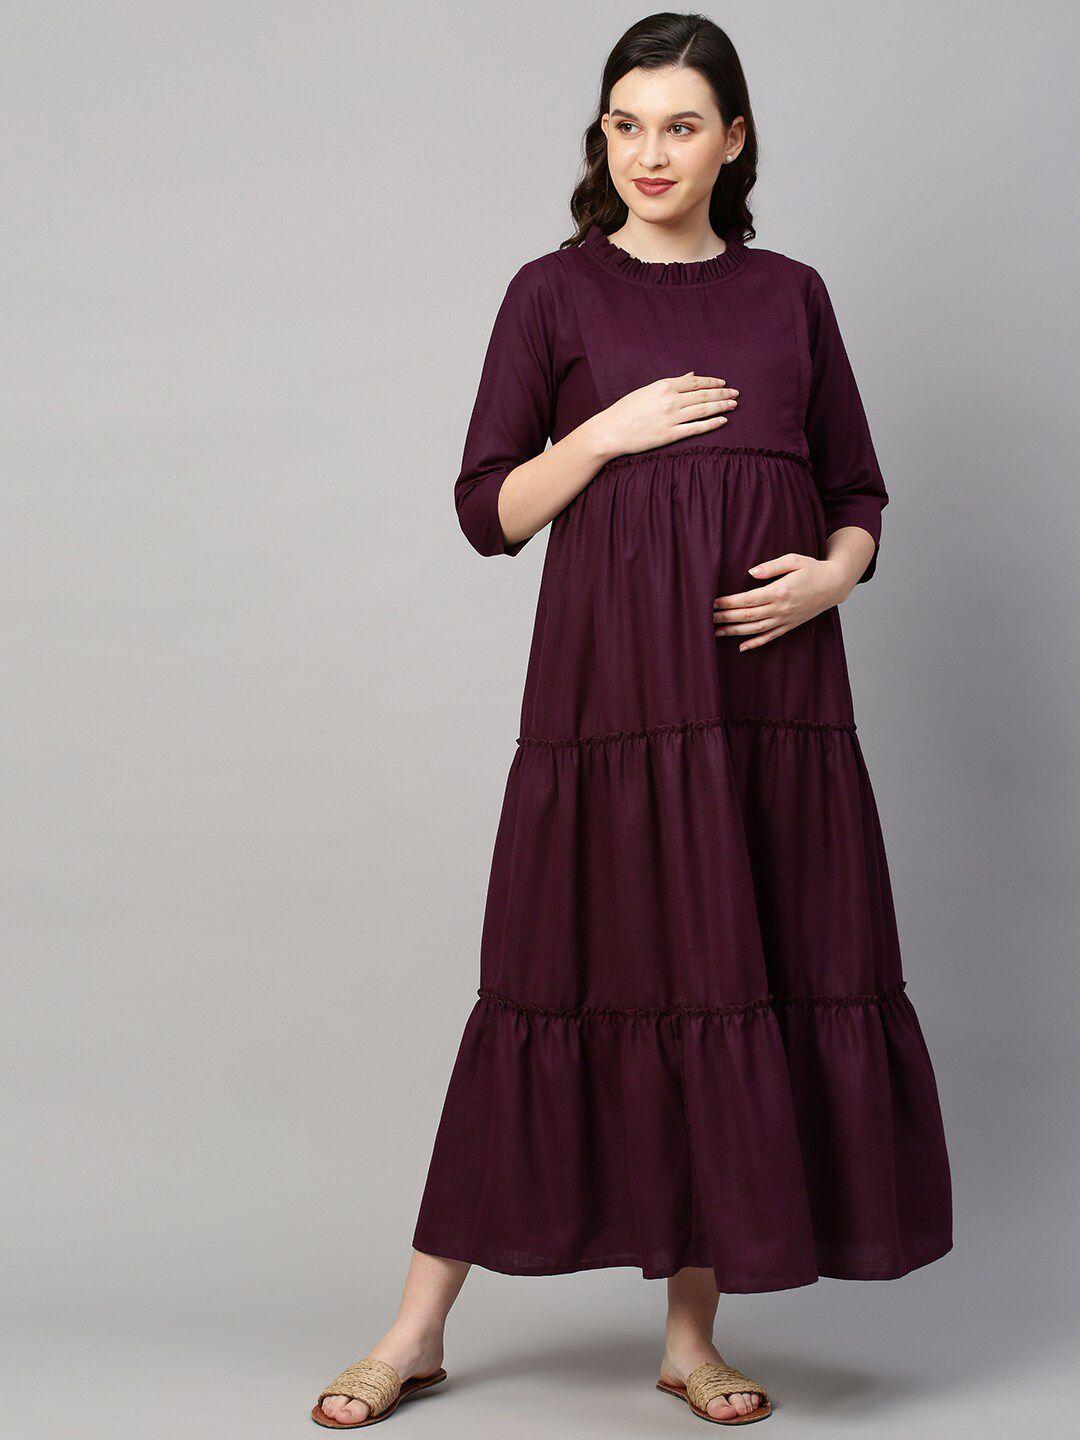 momtobe women purple solid maternity nursing empire midi dress